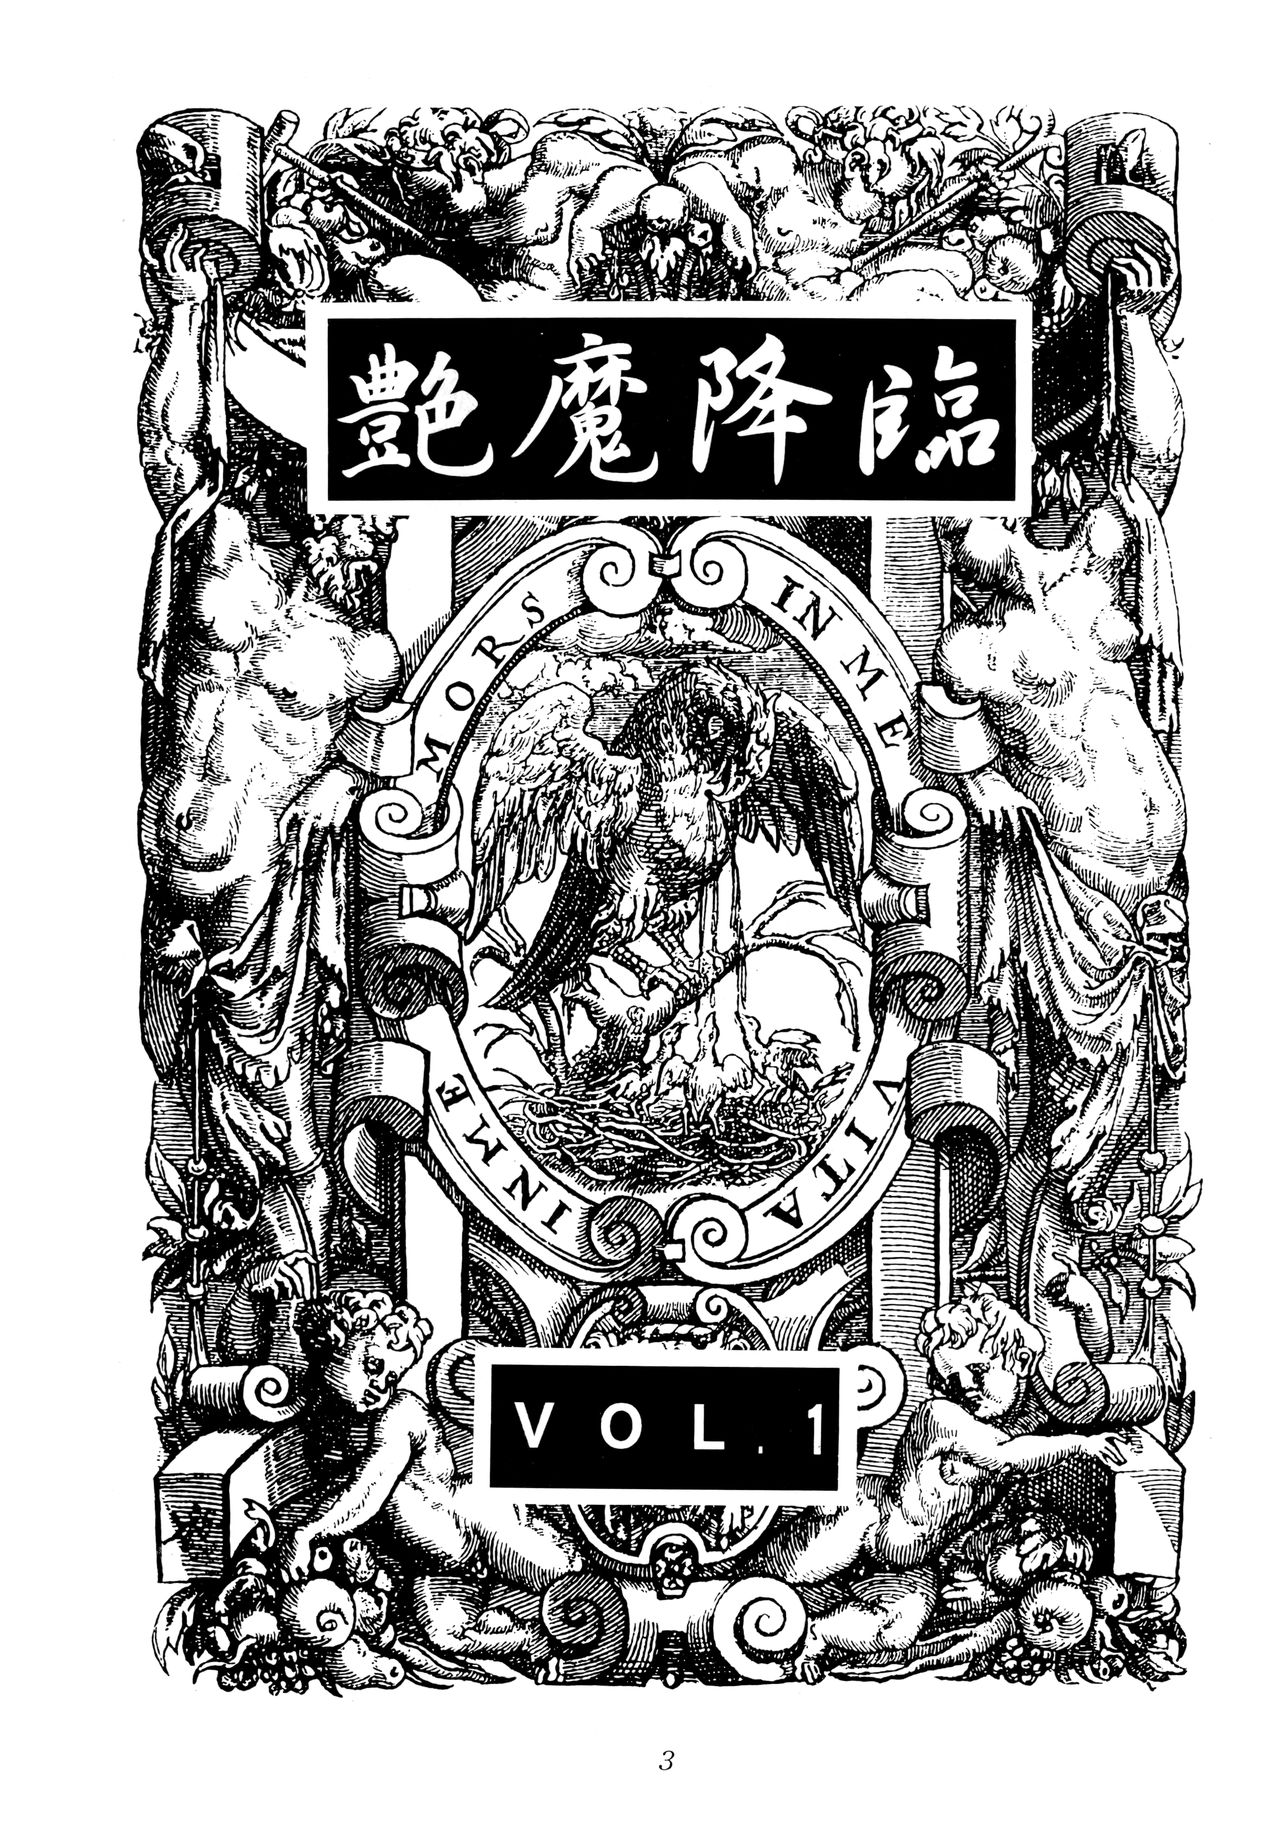 [KENIX (にんにん！、王彪)] 艶魔降臨 vol.1 (ヴァンパイア)